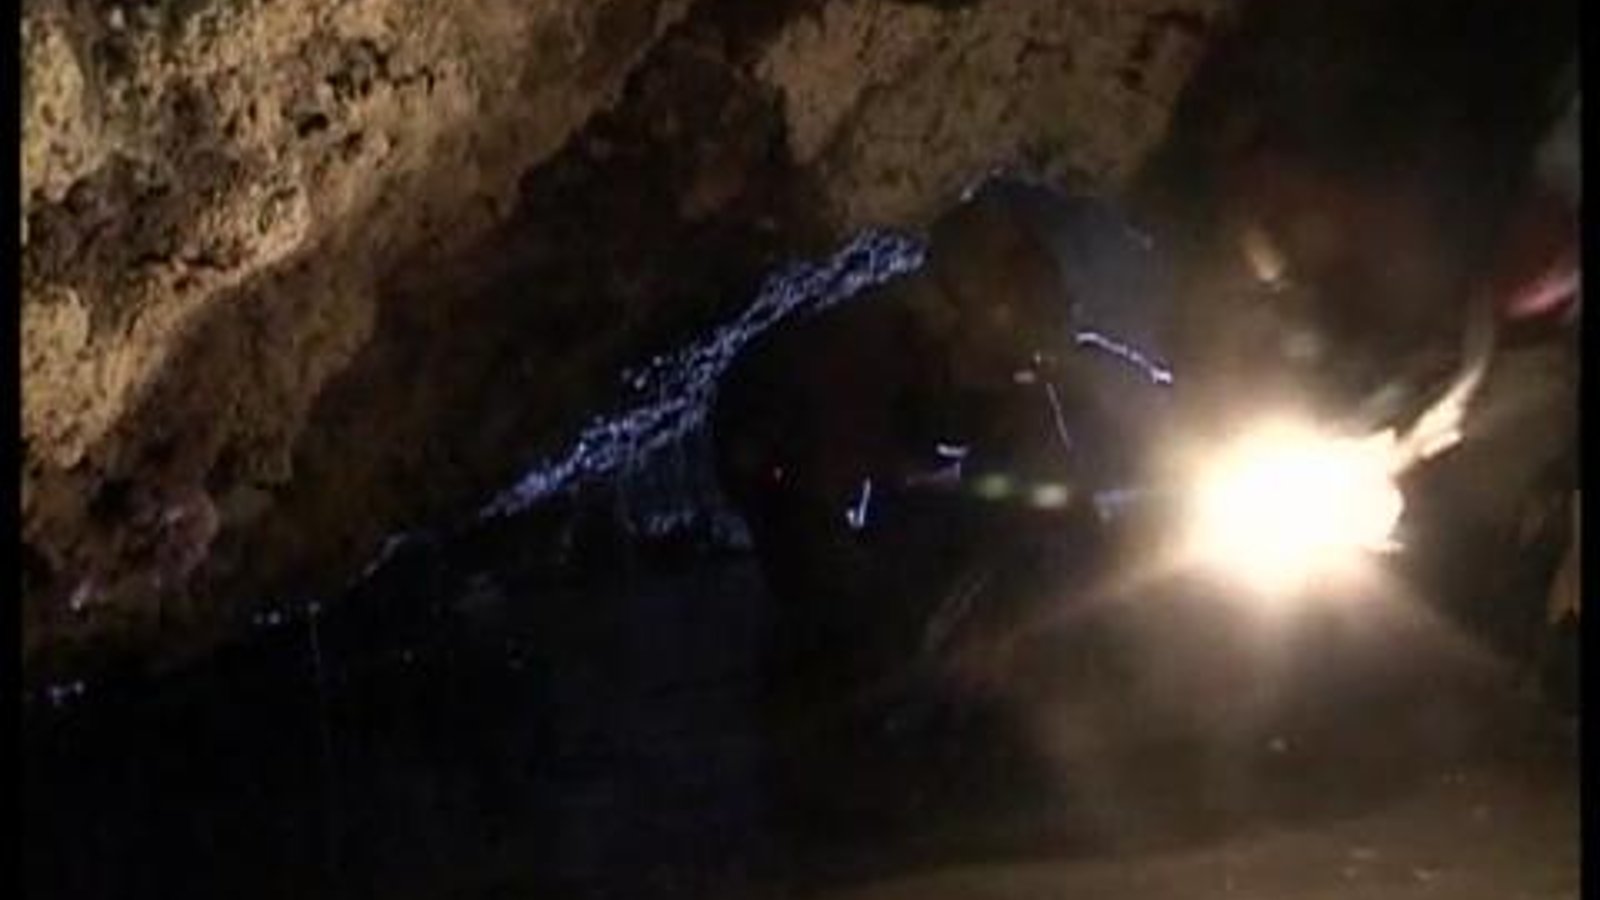 Nature's Chemical Wonder - Acid Caves Explored